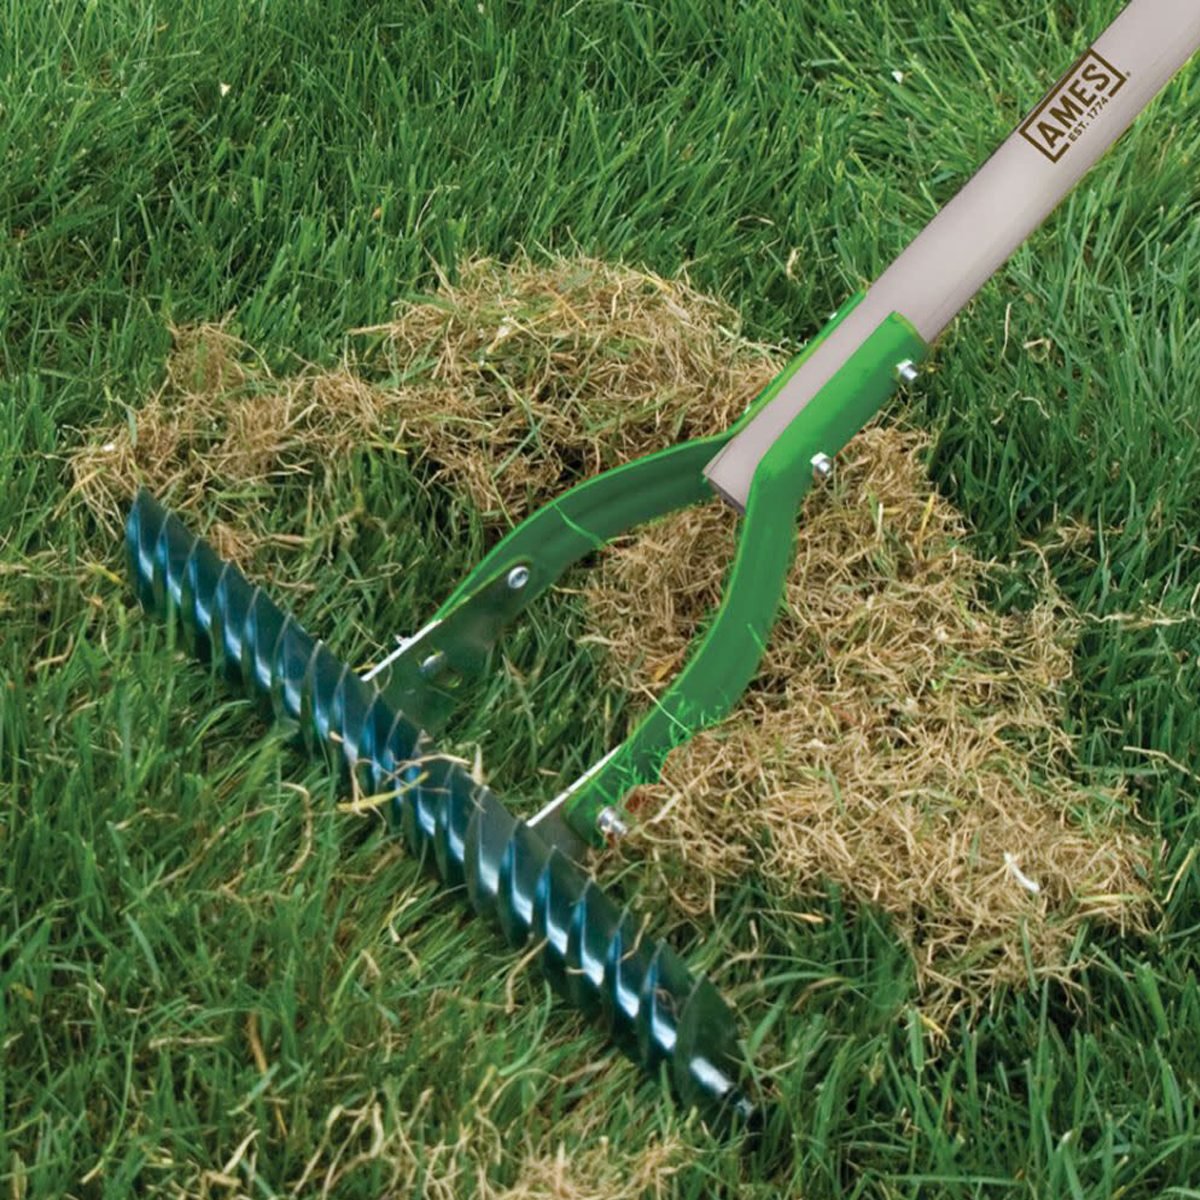 7 Best Lawn Dethatching Rakes to Clear Unwanted Debris